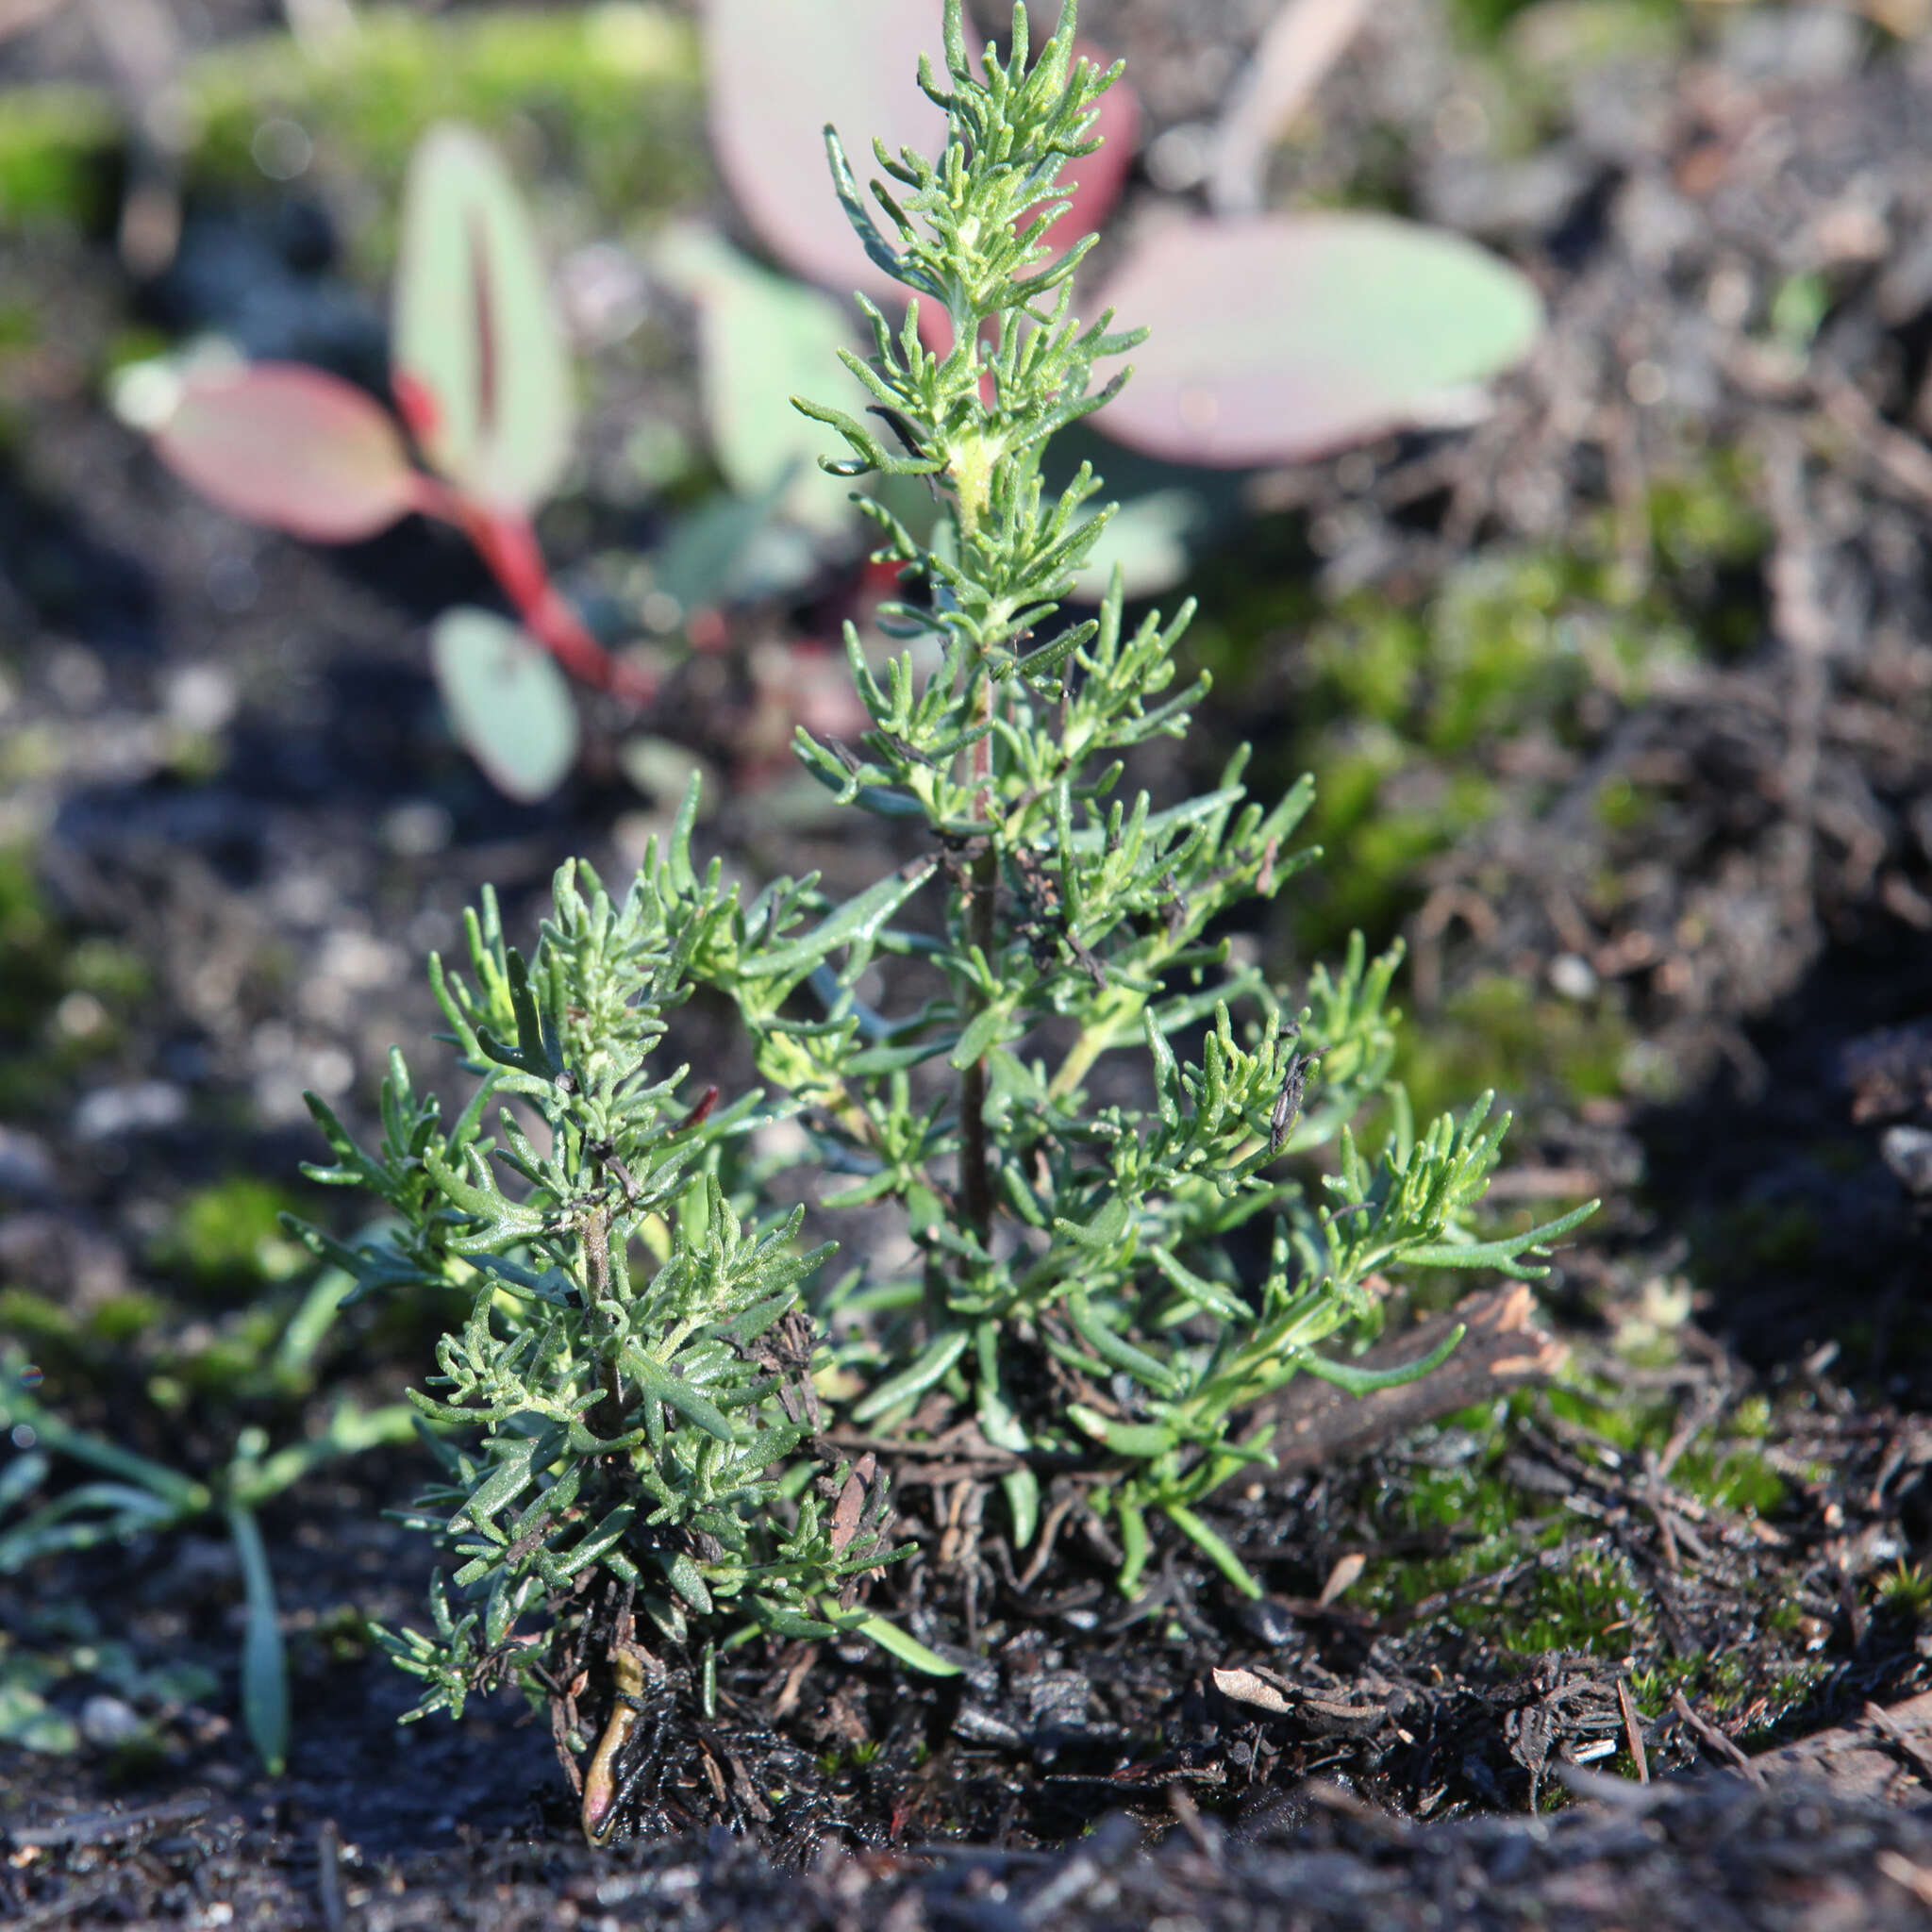 Image of Turpentine Mint-bush